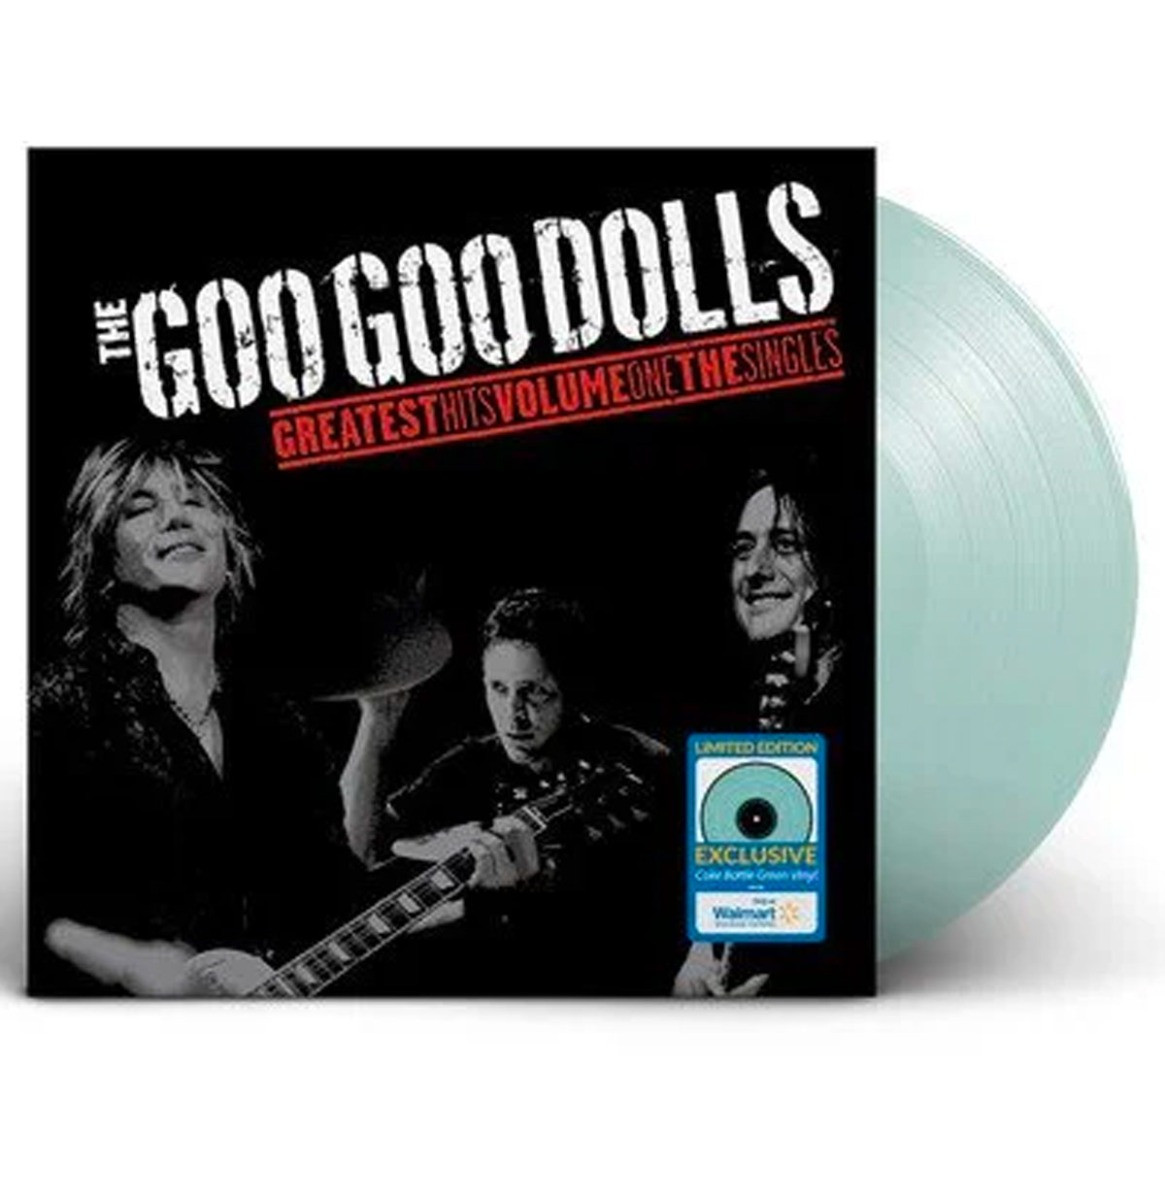 The Goo Goo Dolls - Greatest Hits Volume One: The Singles (Gekleurd Vinyl) (Walmart Exclusive) LP